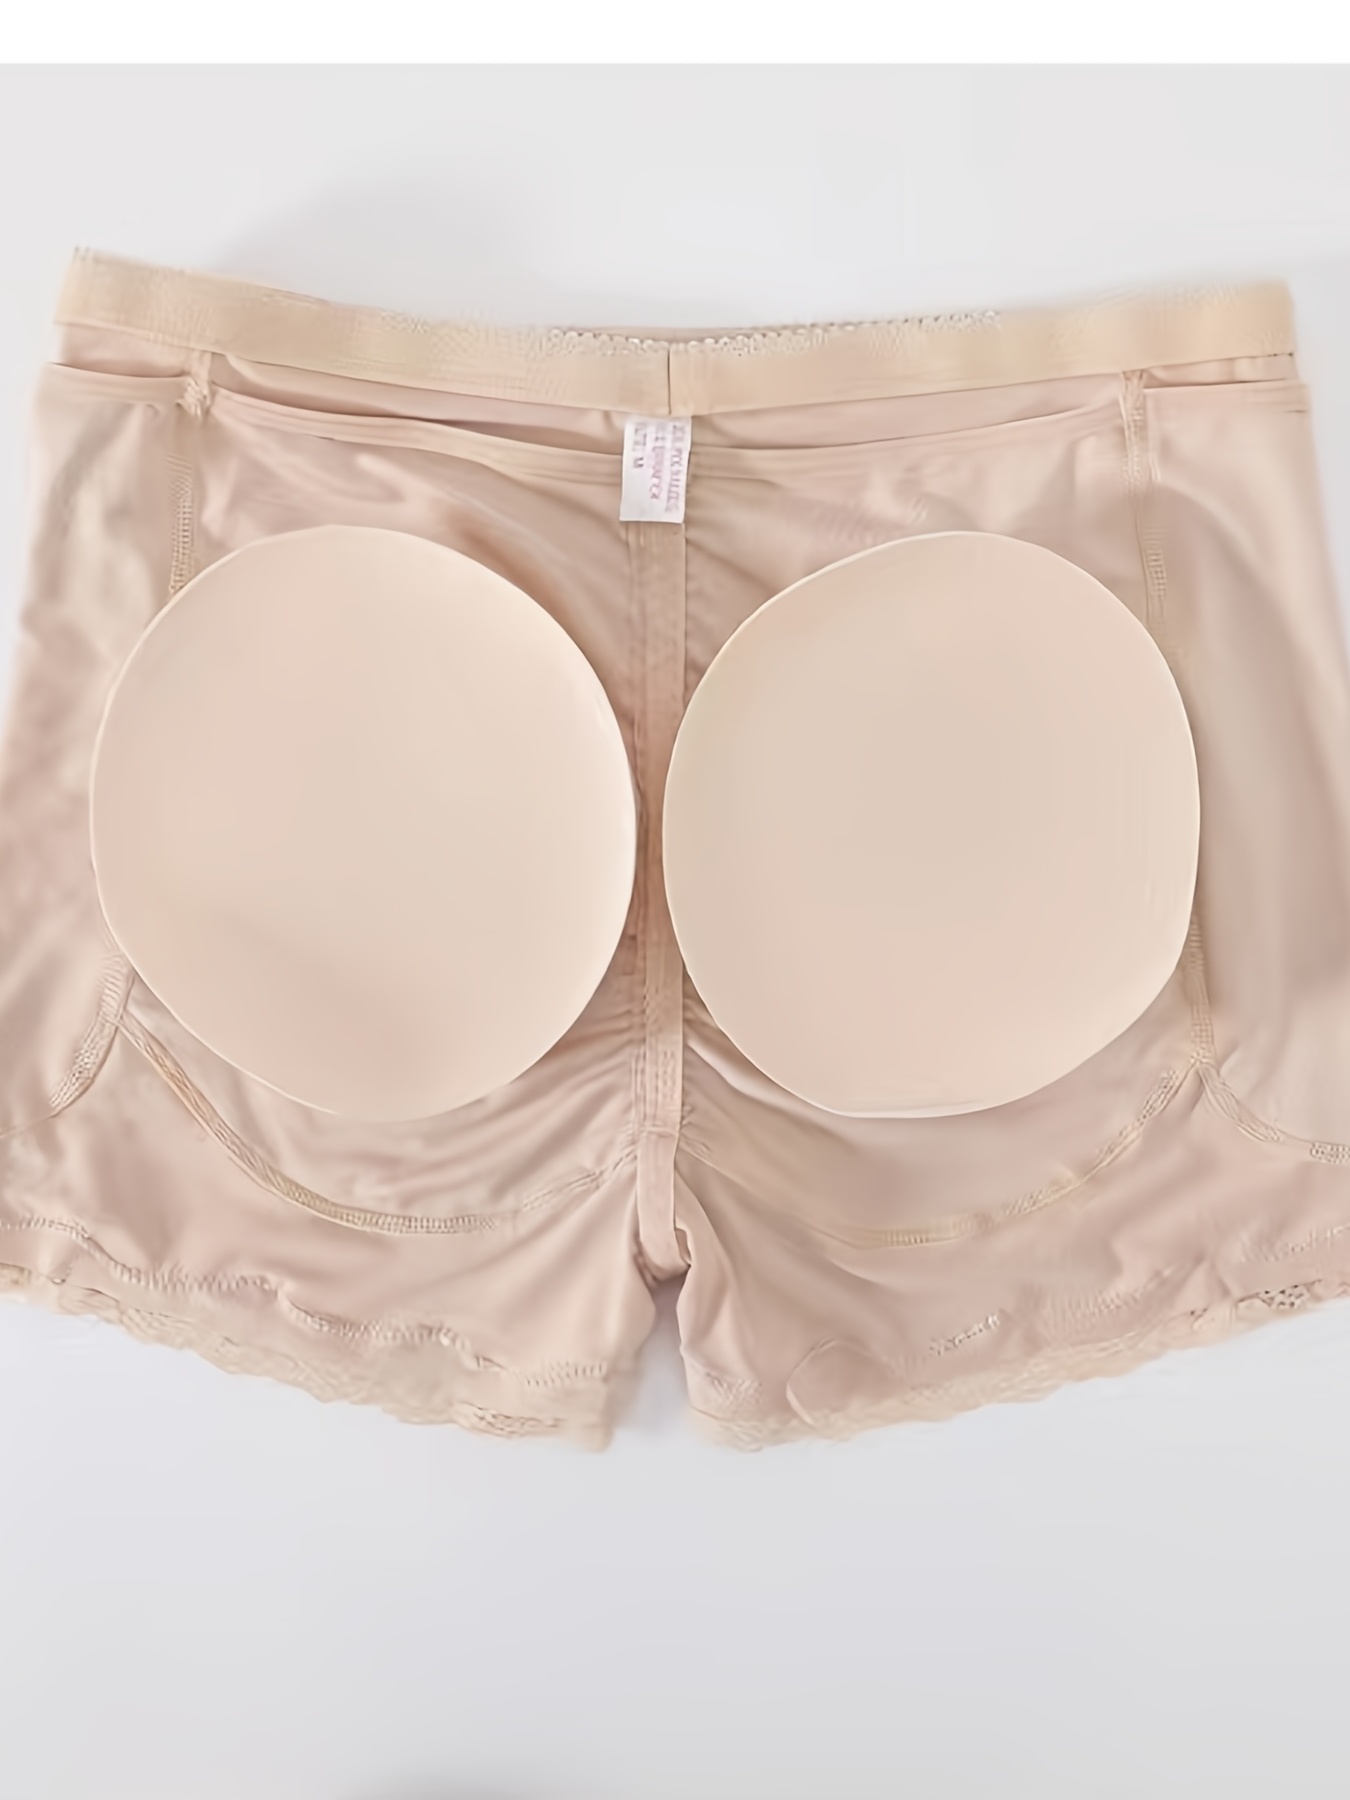 Hip Pads for Women Fake Butt Padded Underwear Enhancer Shapewear